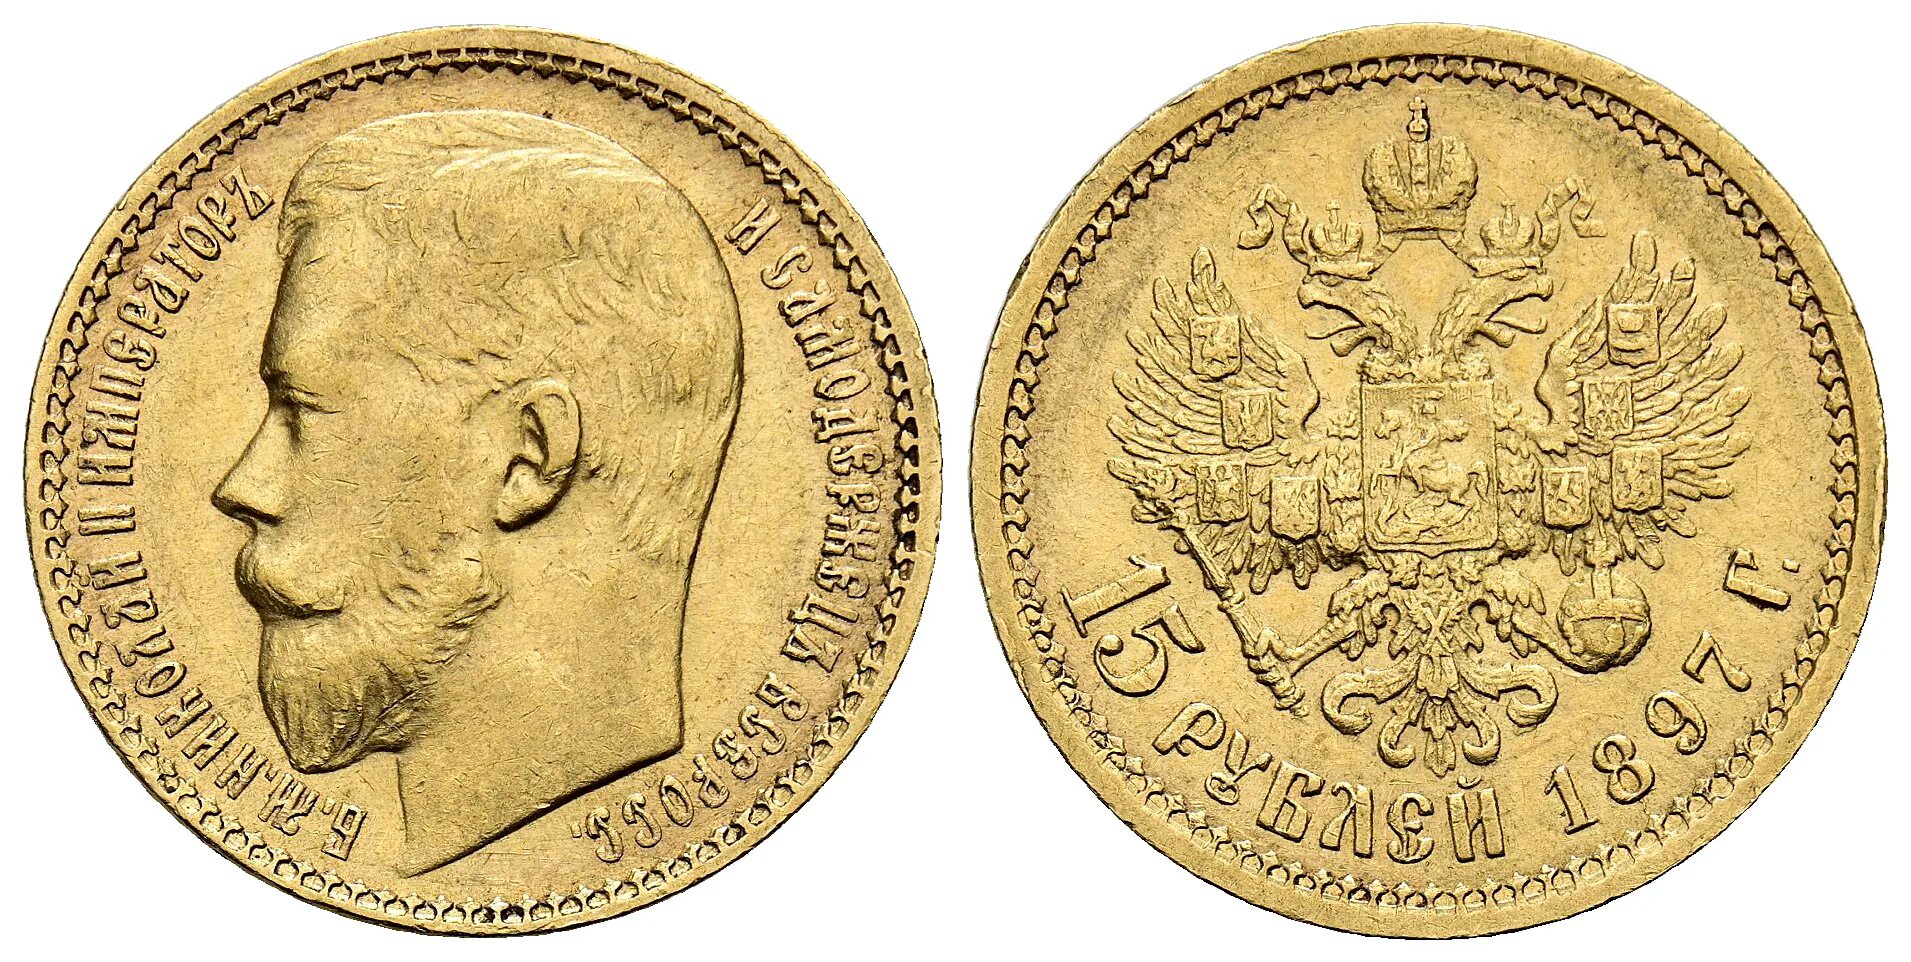 15 Рублей Золотая монета Николая 2. 15 Рублей 1897. Золотой рубль 1897